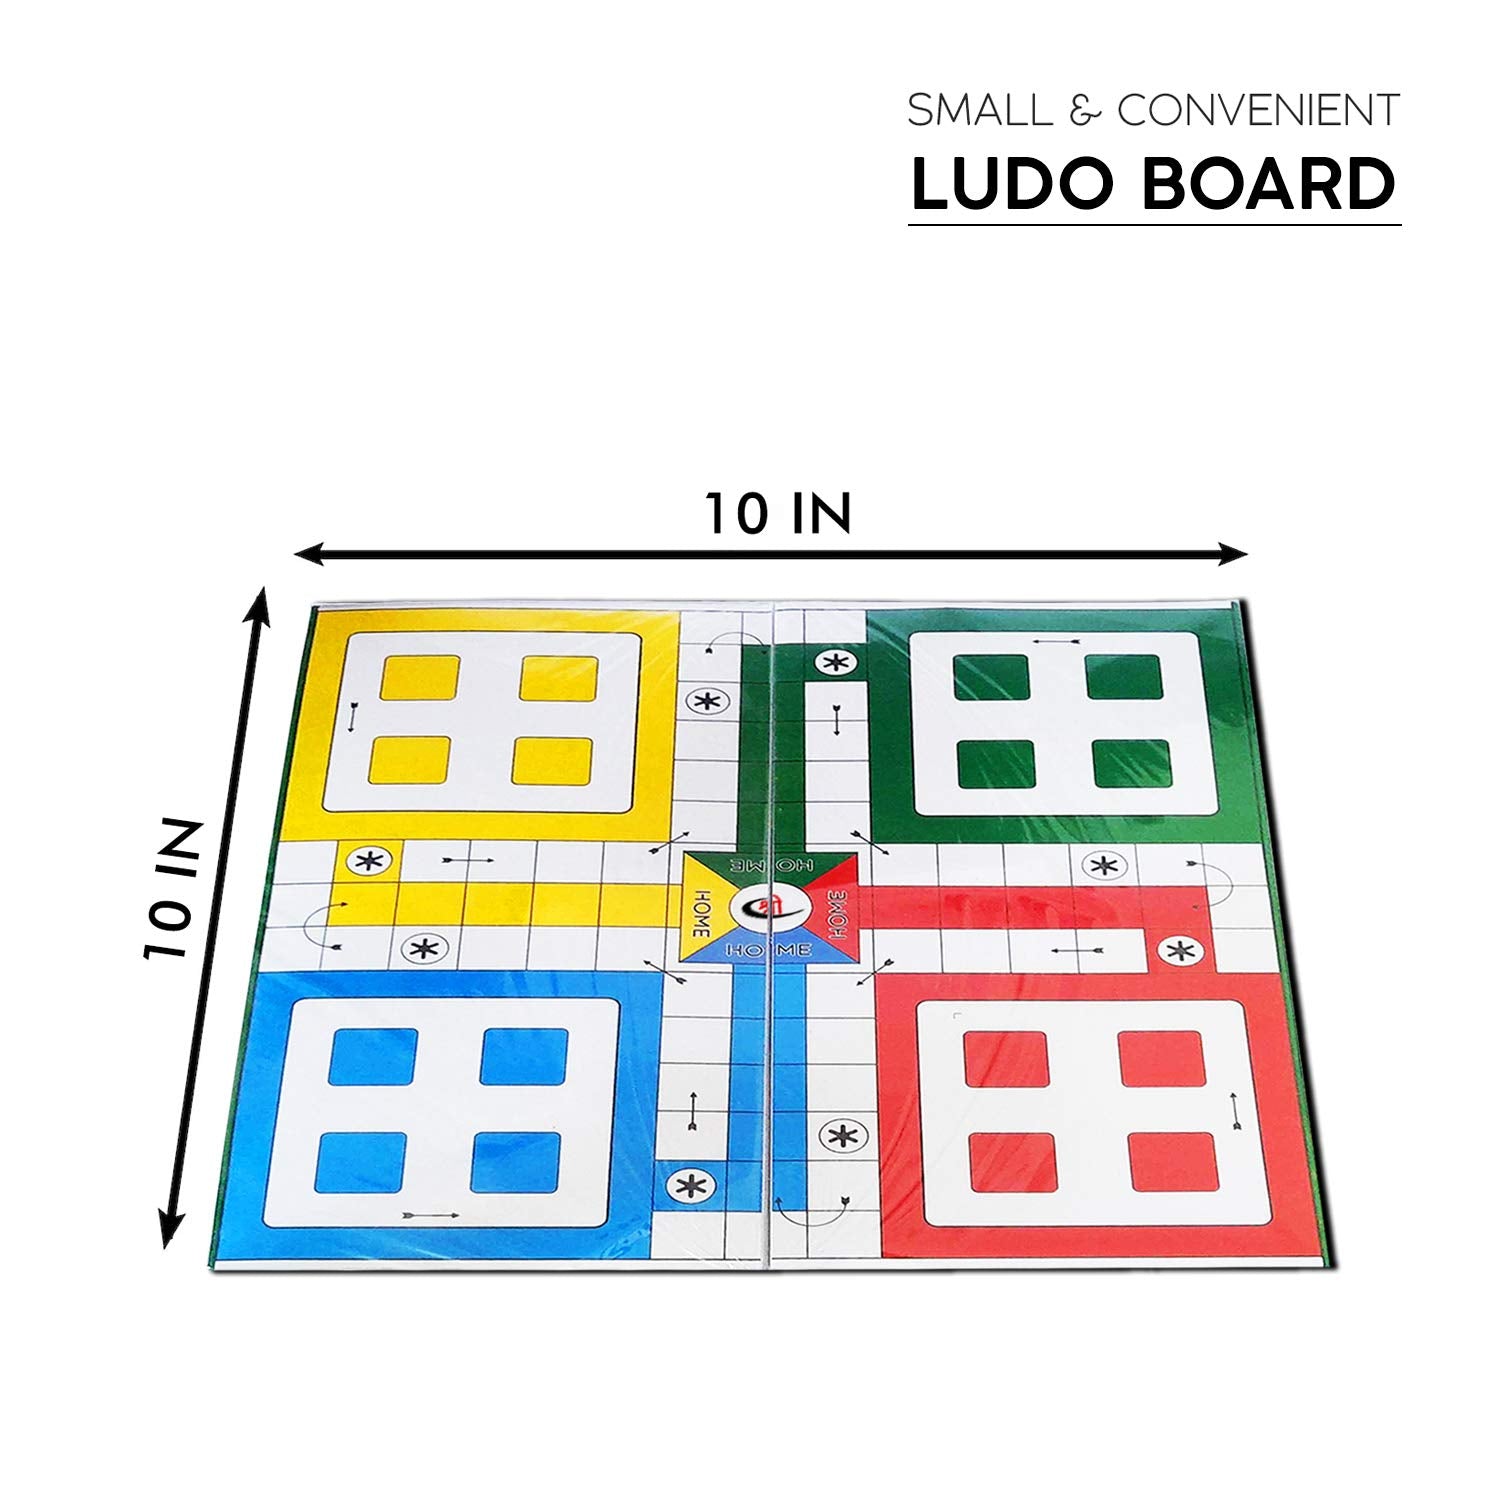 Kids Mandi Ludo and Snake and Ladder Board Game